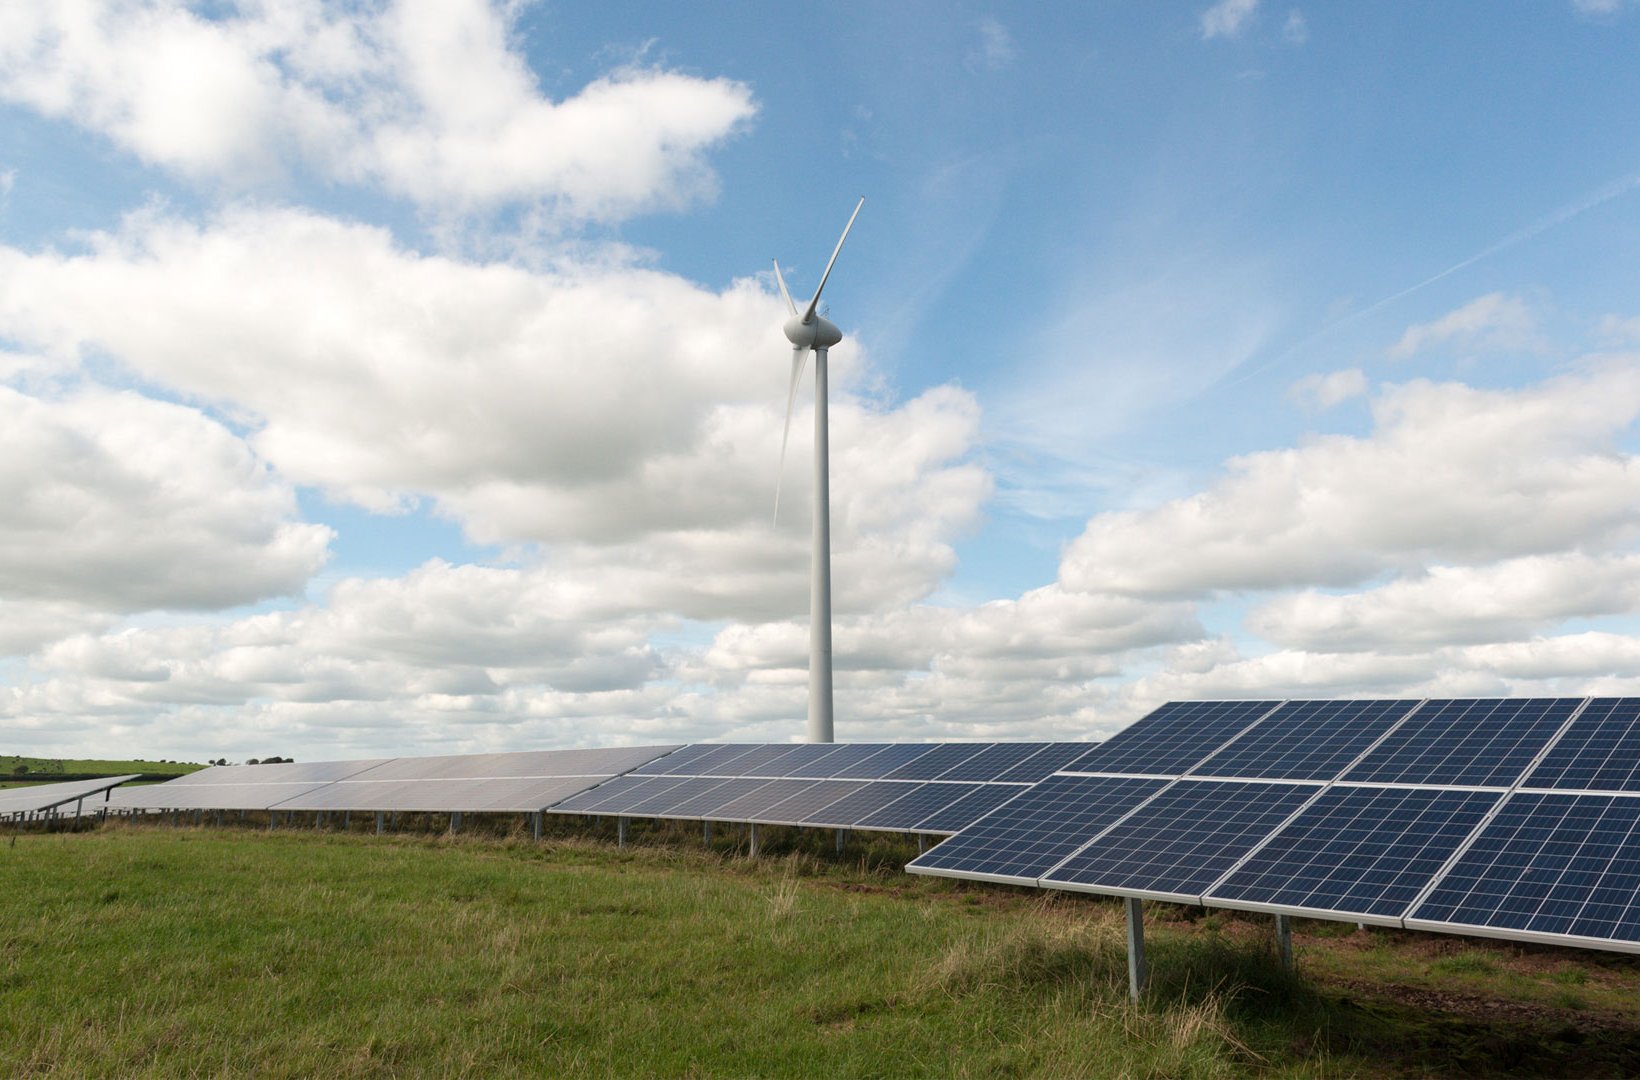 Solar panels and a wind turbine